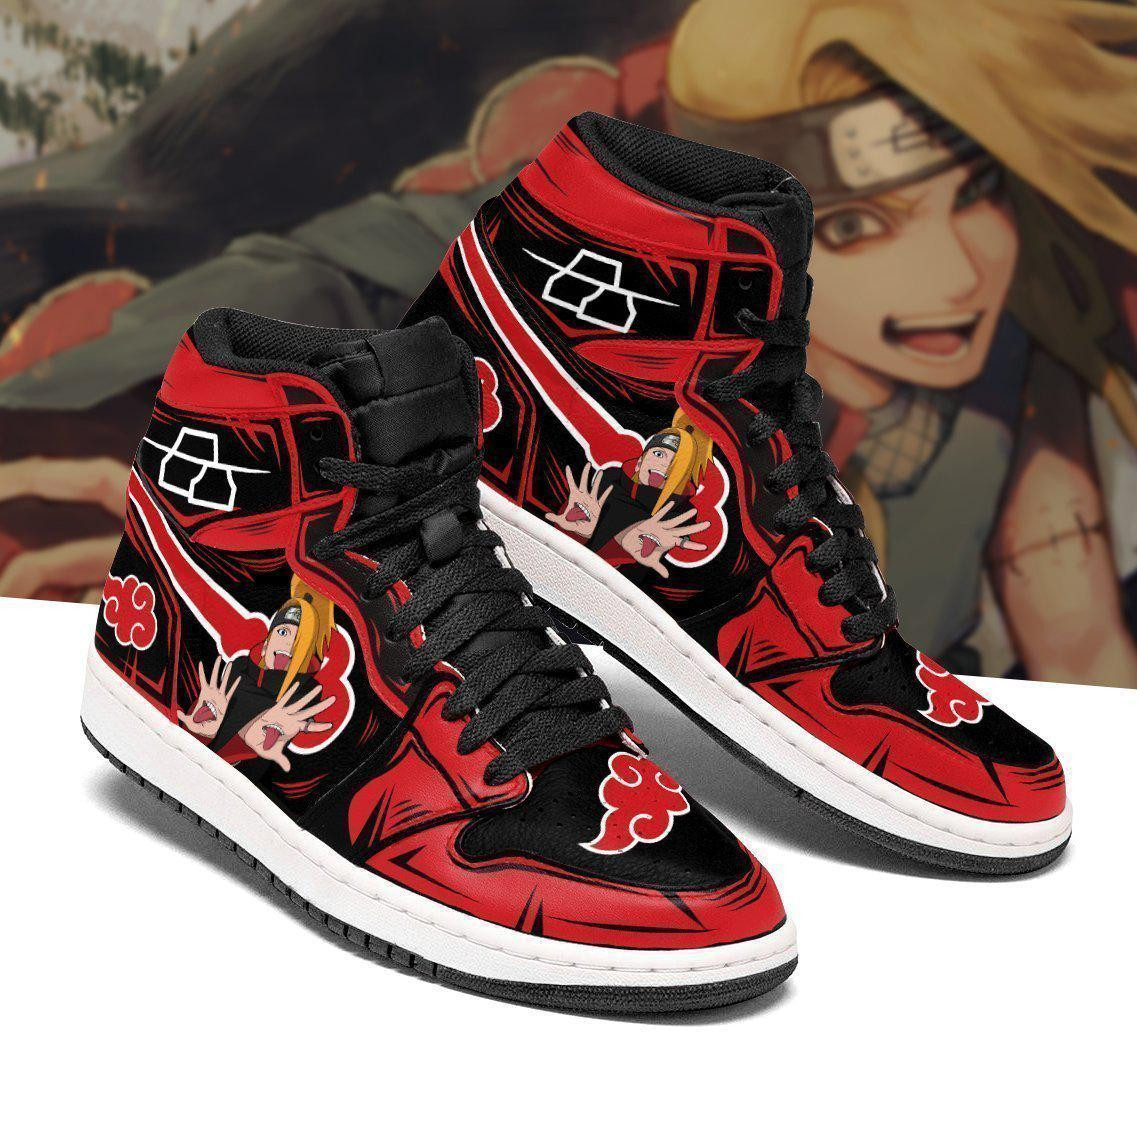 AKT Deidara Anime Air Jordan High top shoes2